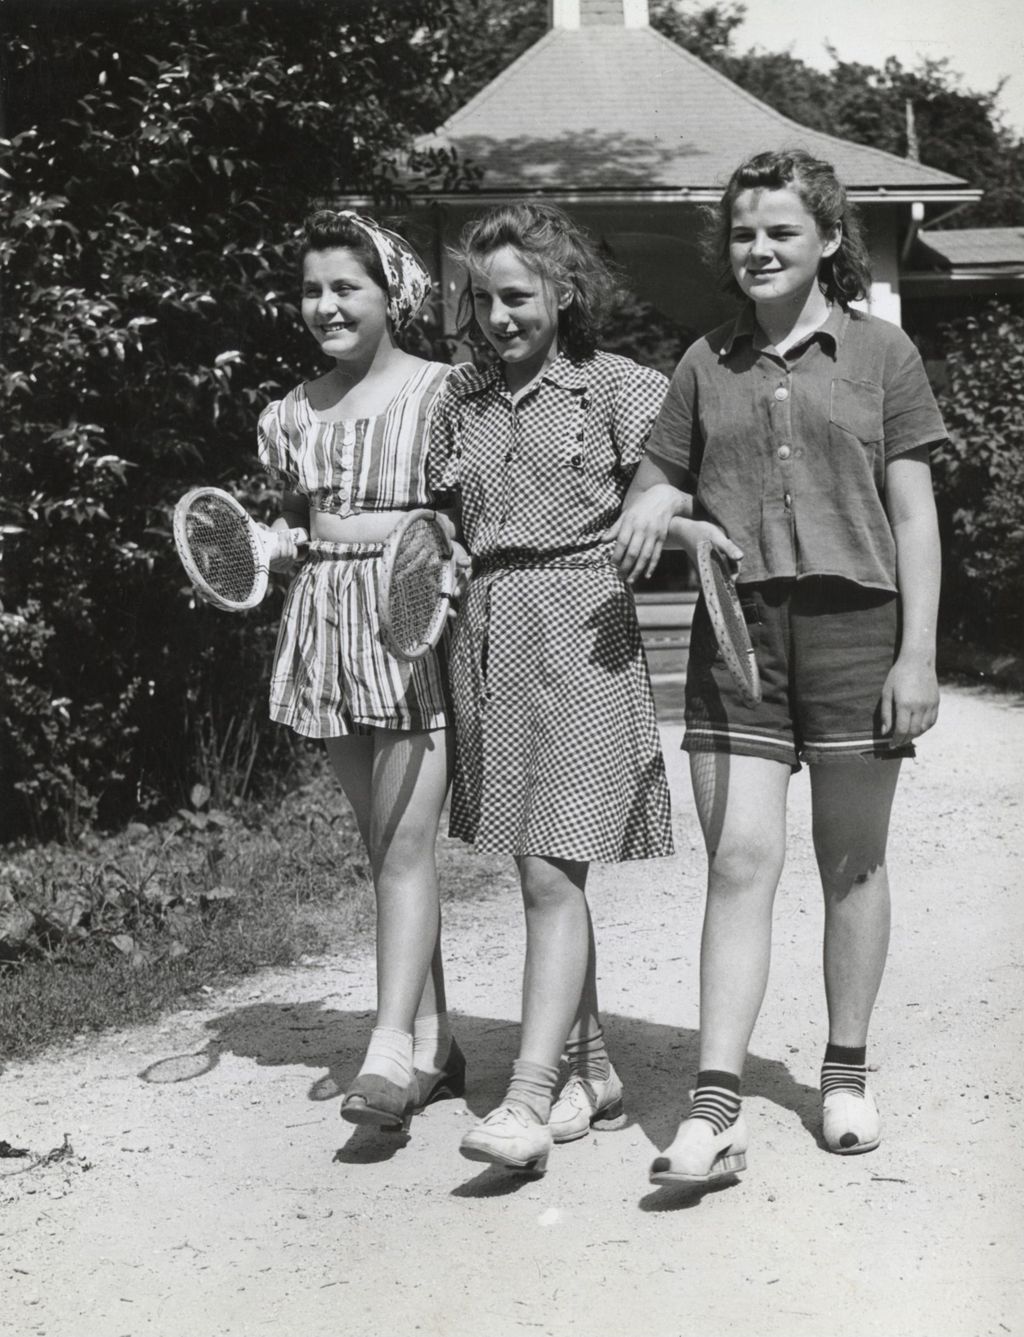 Three girls with tennis rackets walking